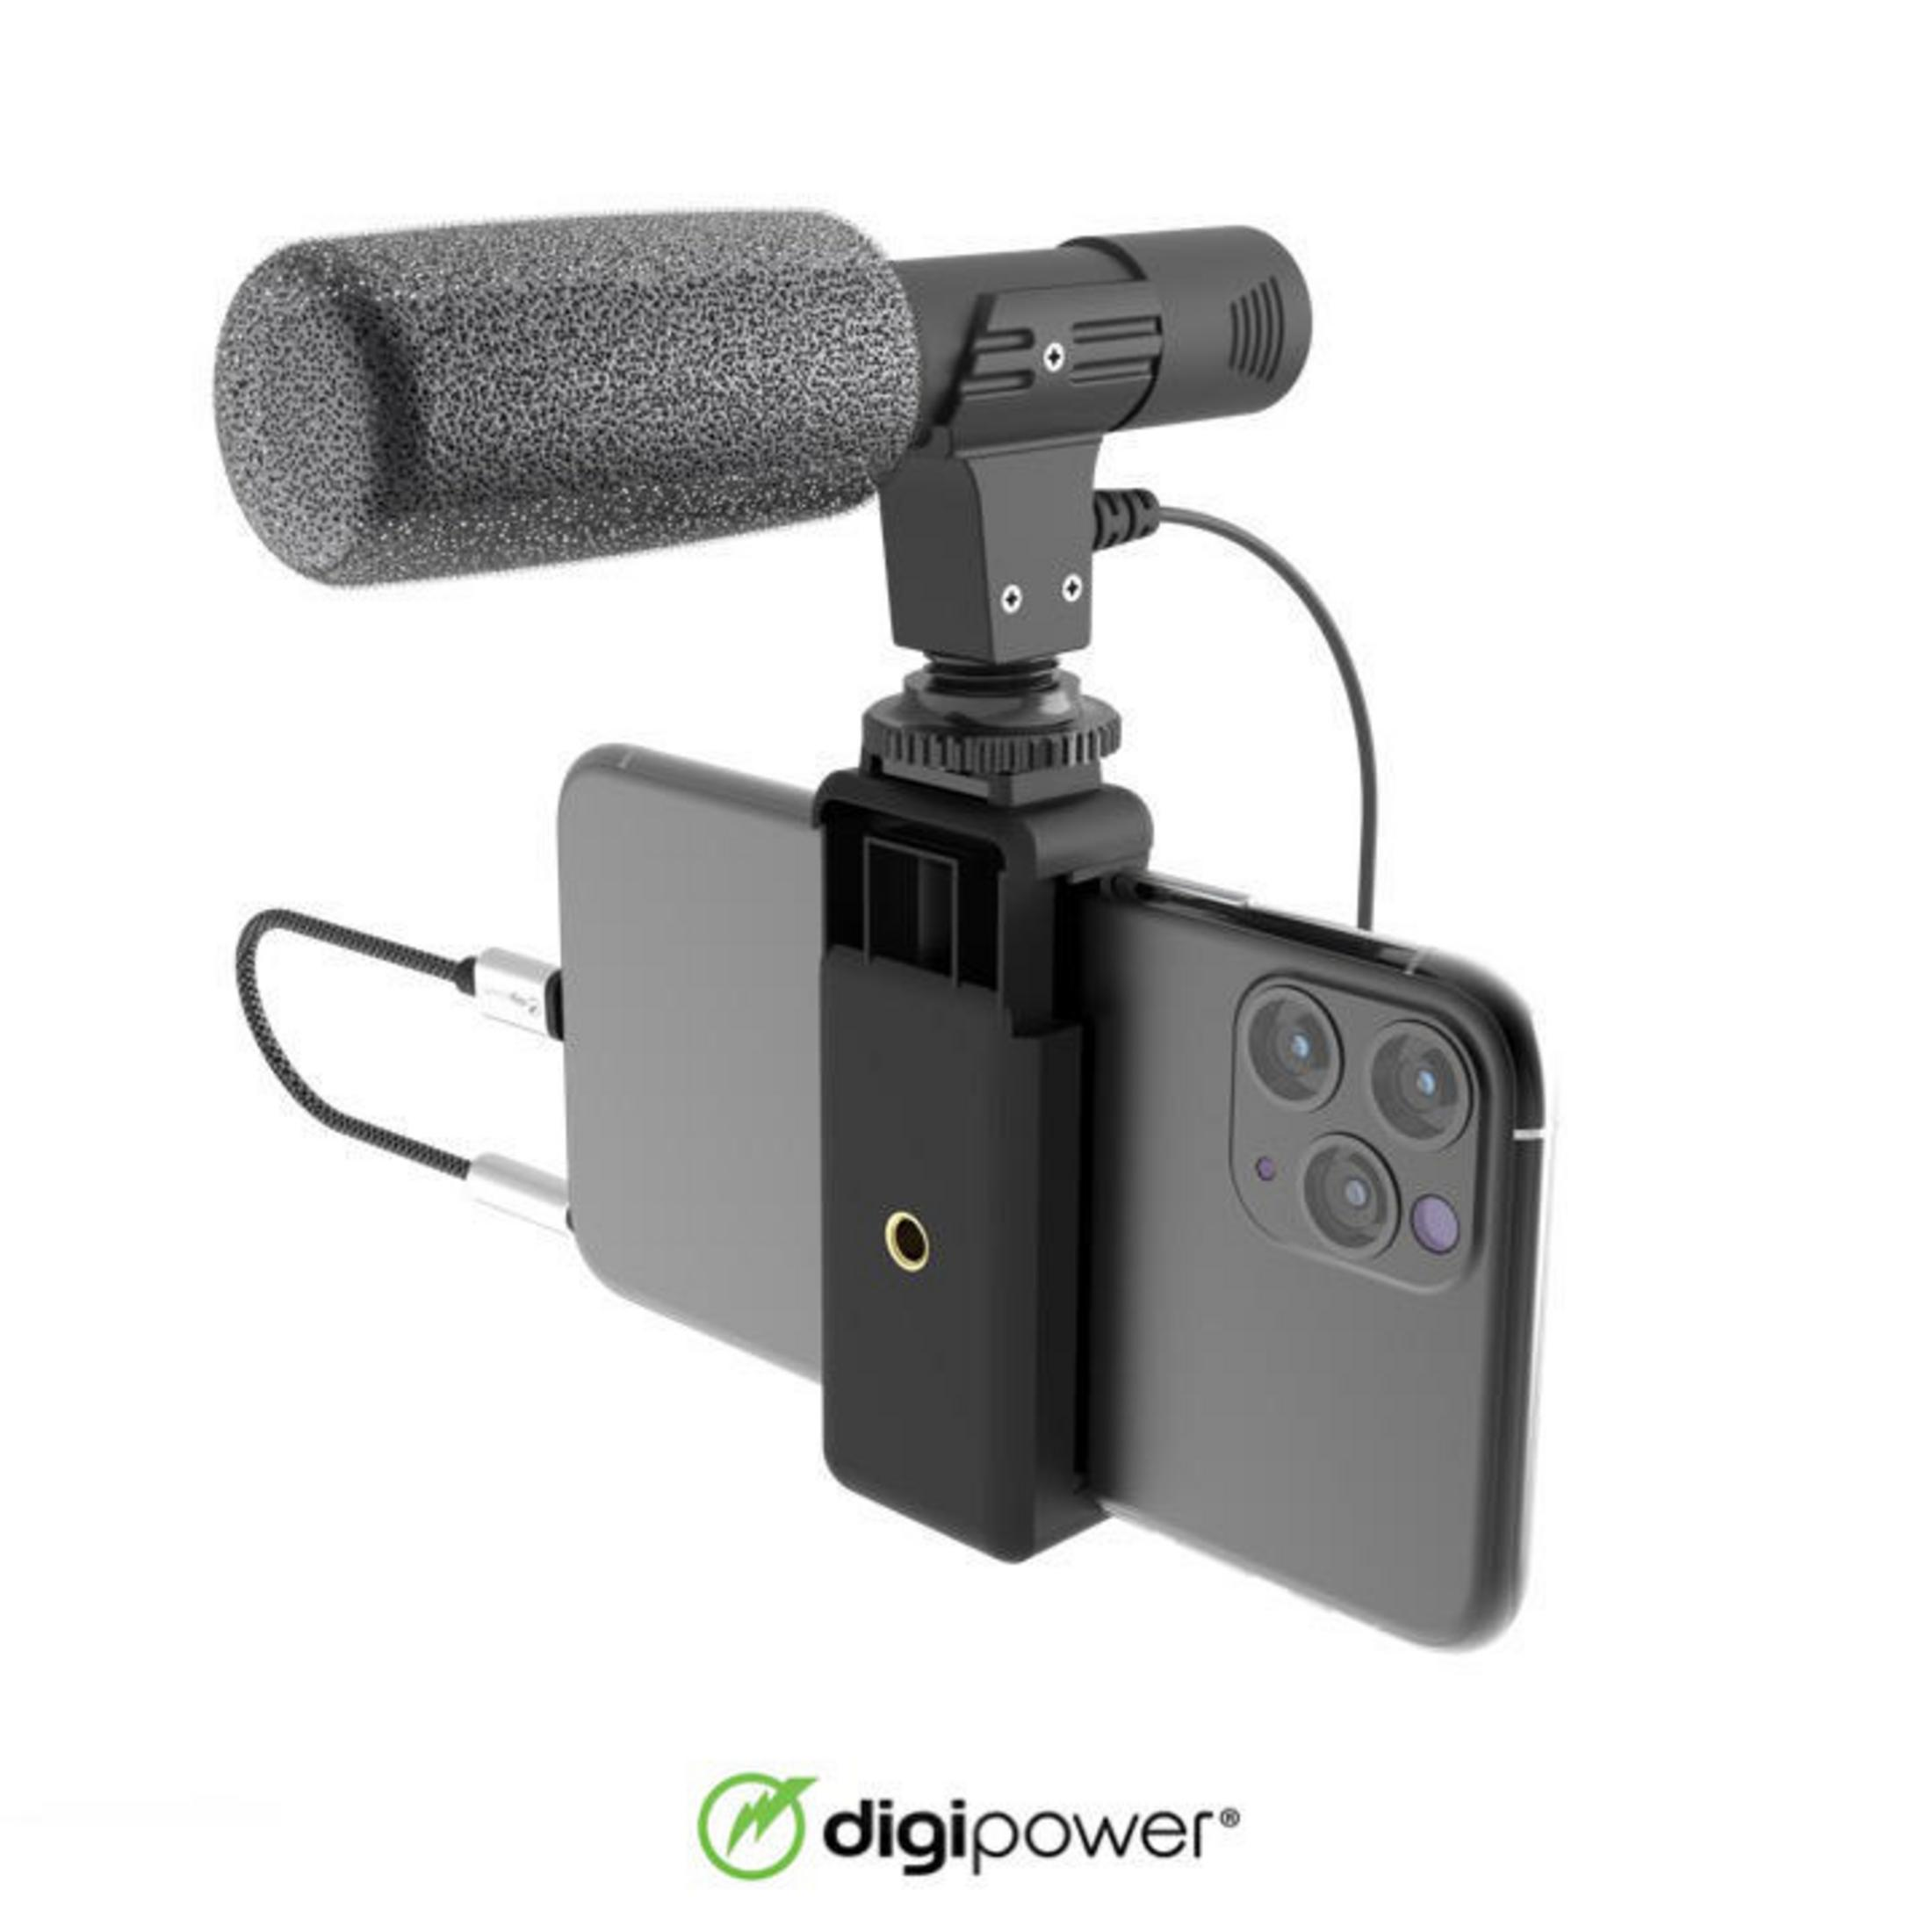 DIGIPOWER DP-M25 Mehrfarbig Mikrofon MIKROFON SHOTGUN